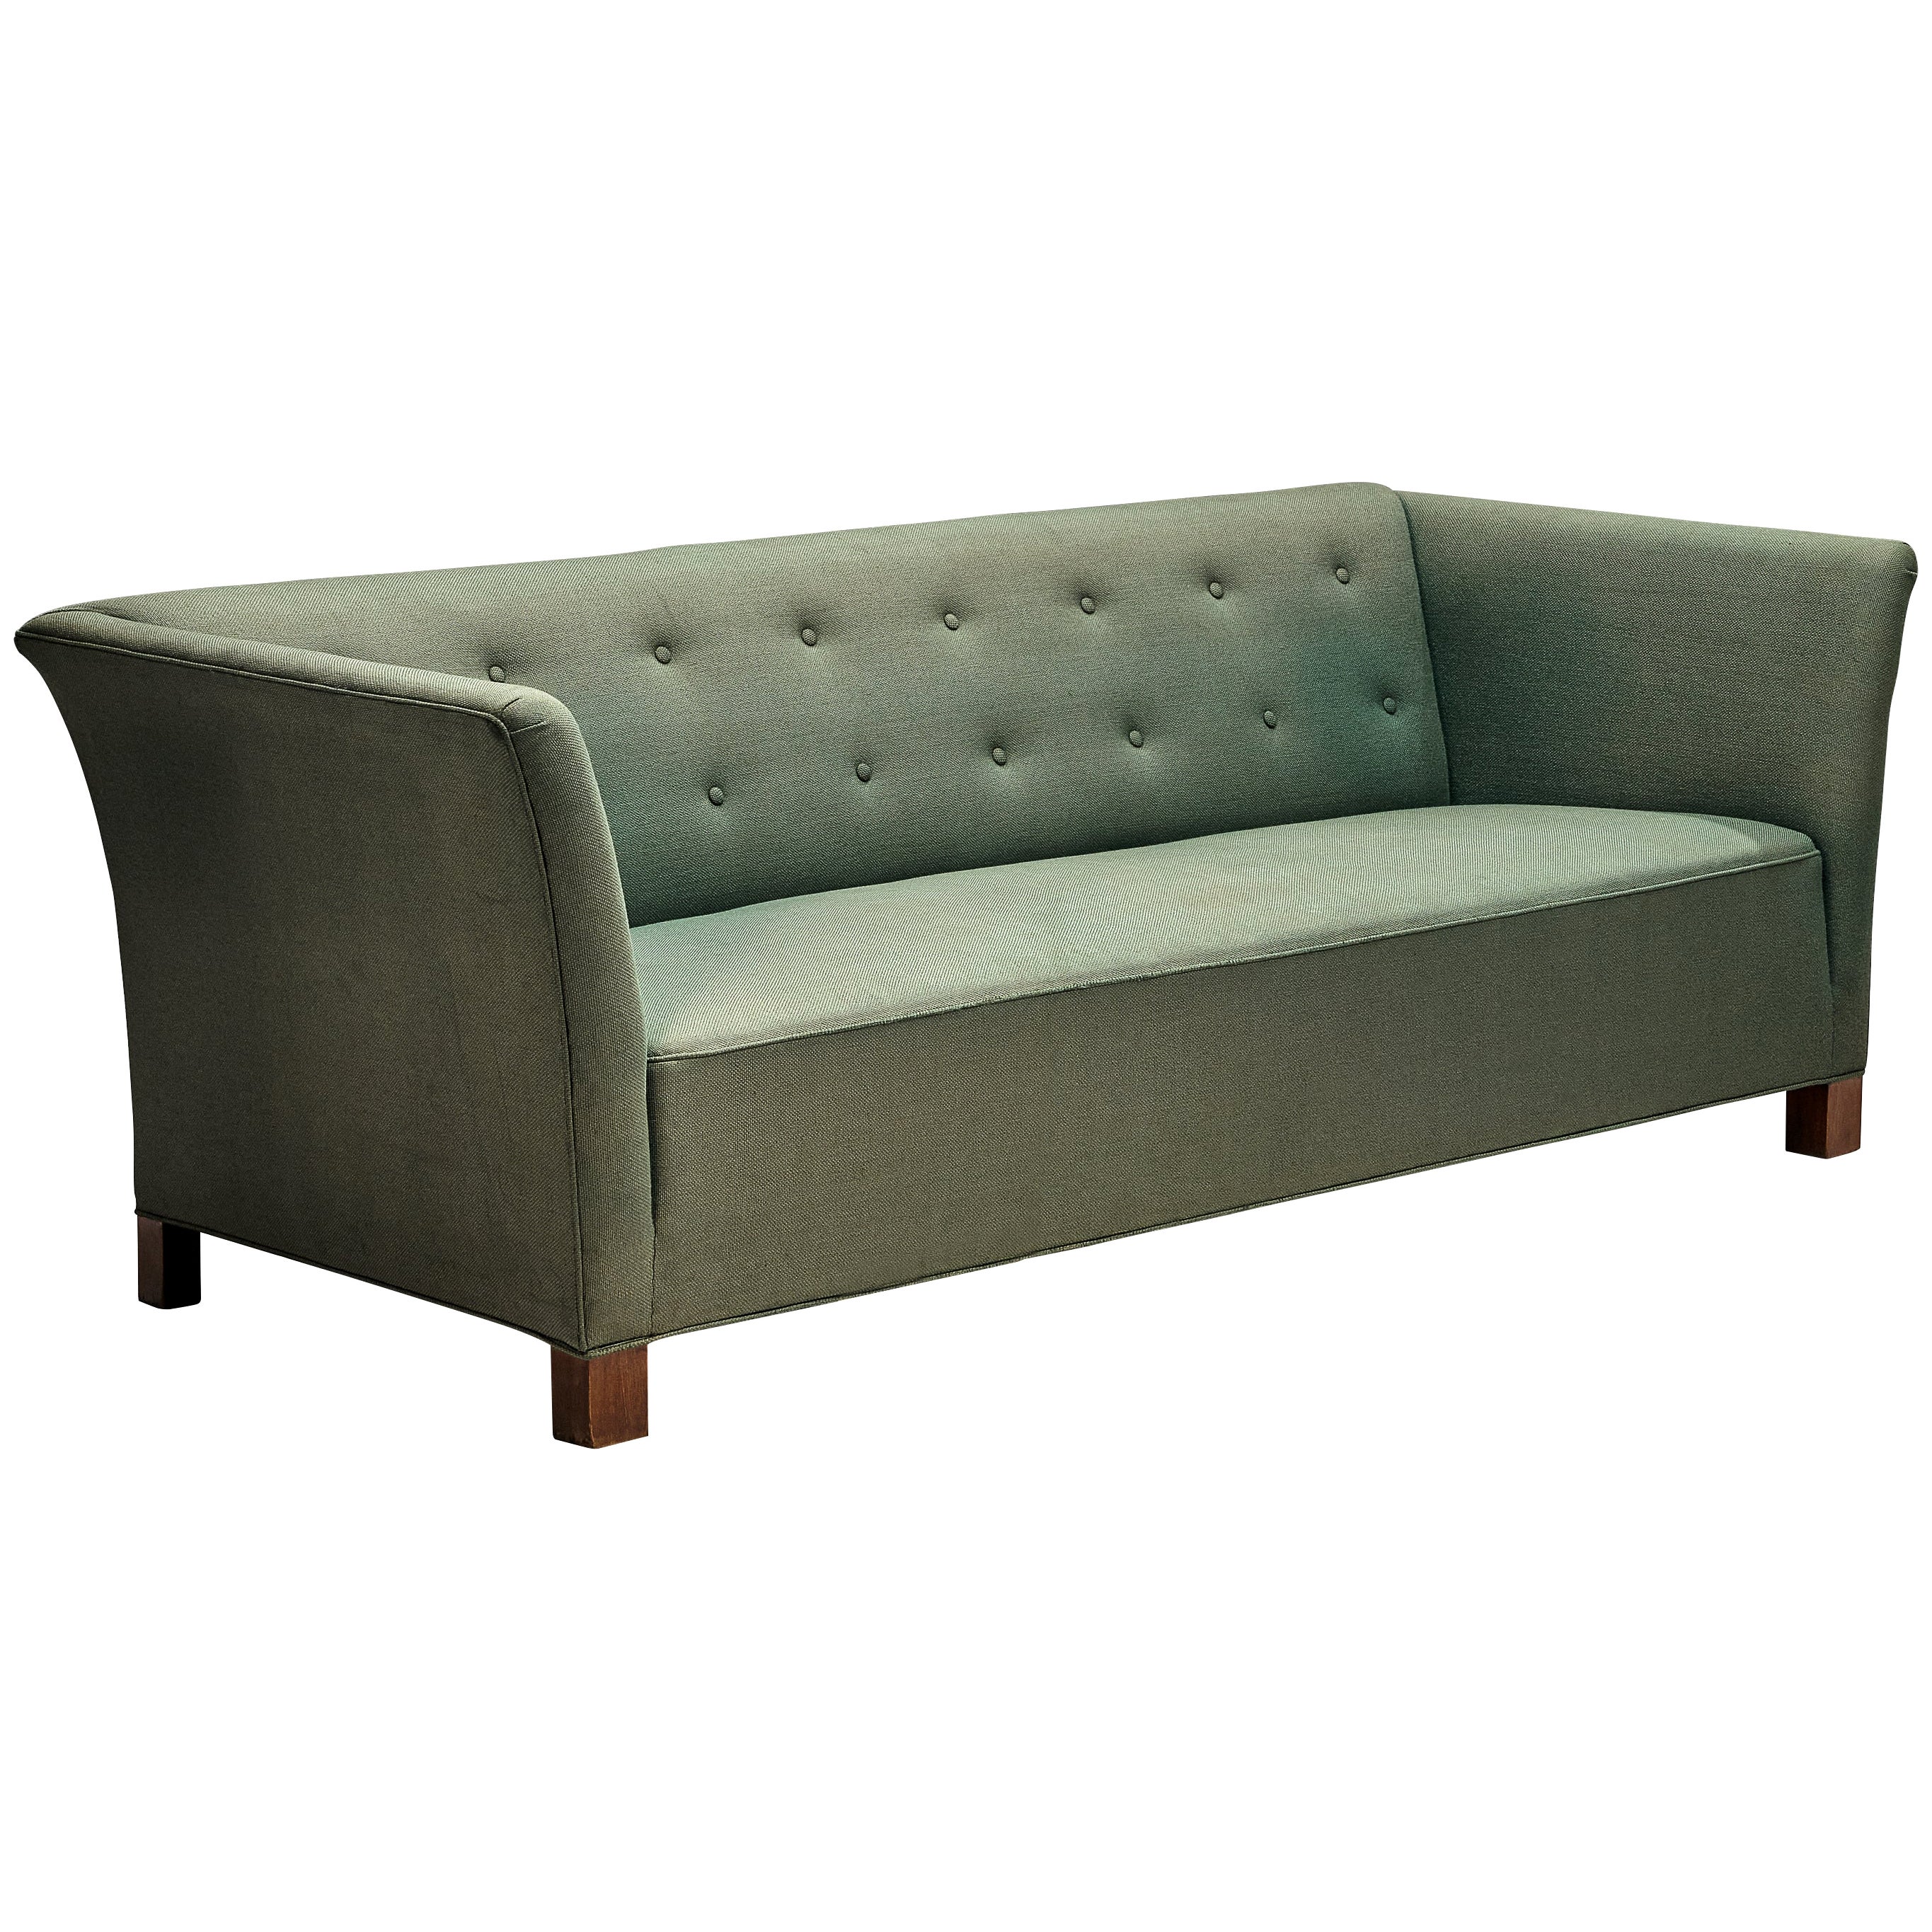 Danish Three-Seat Sofa in Blue Green Upholstery